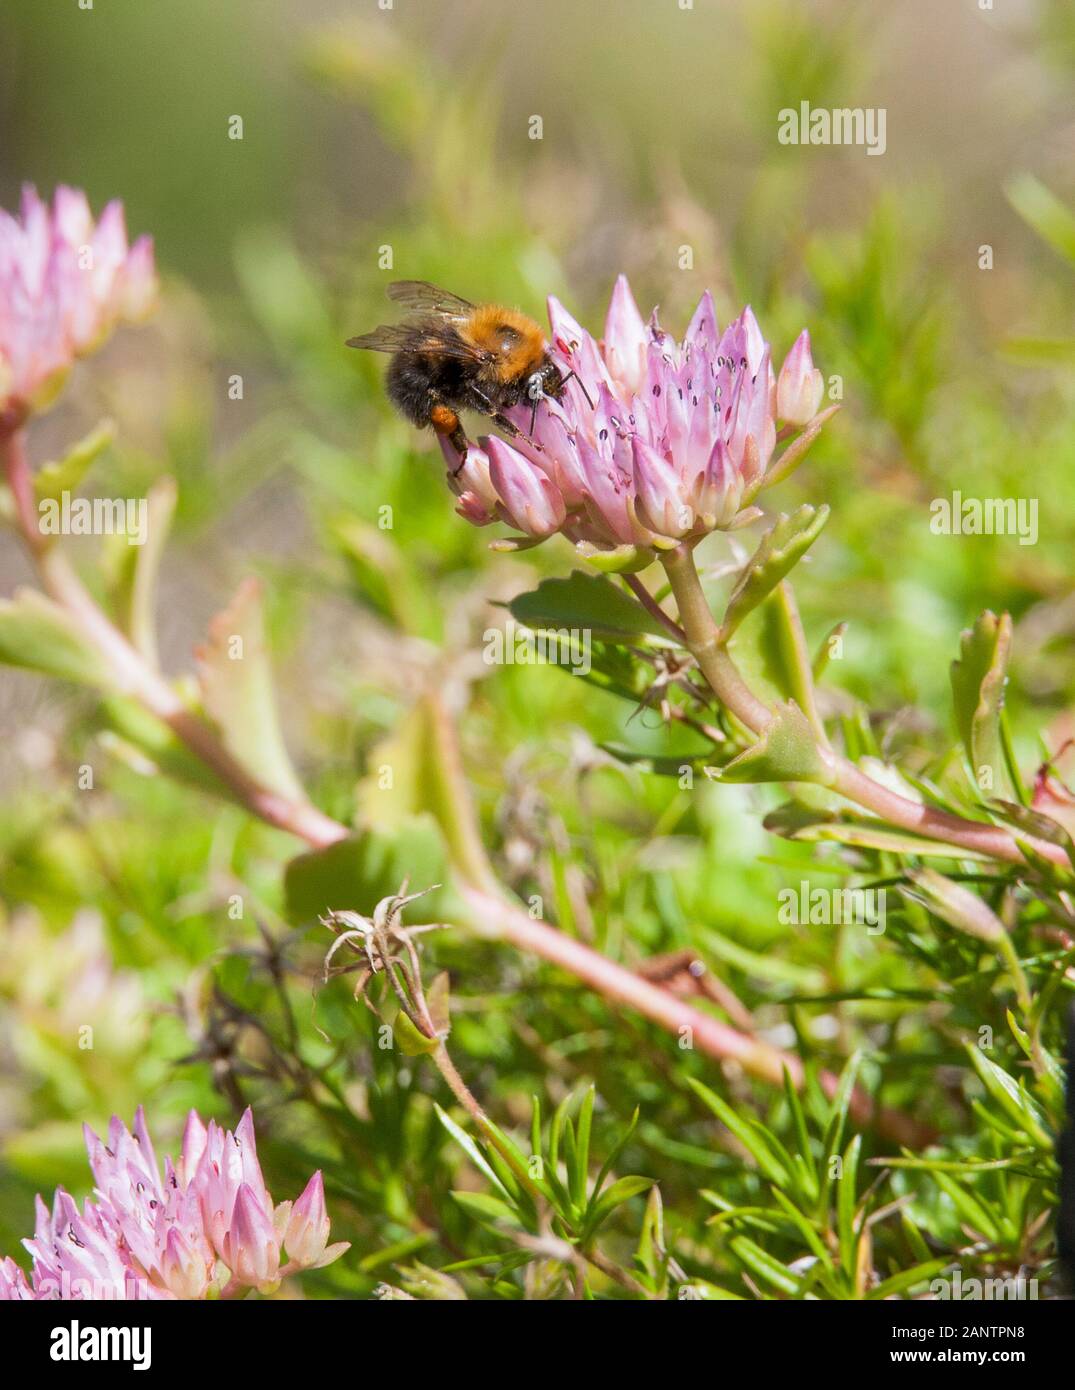 BUMBLEBEE out in garden on flower of Sedum Stock Photo